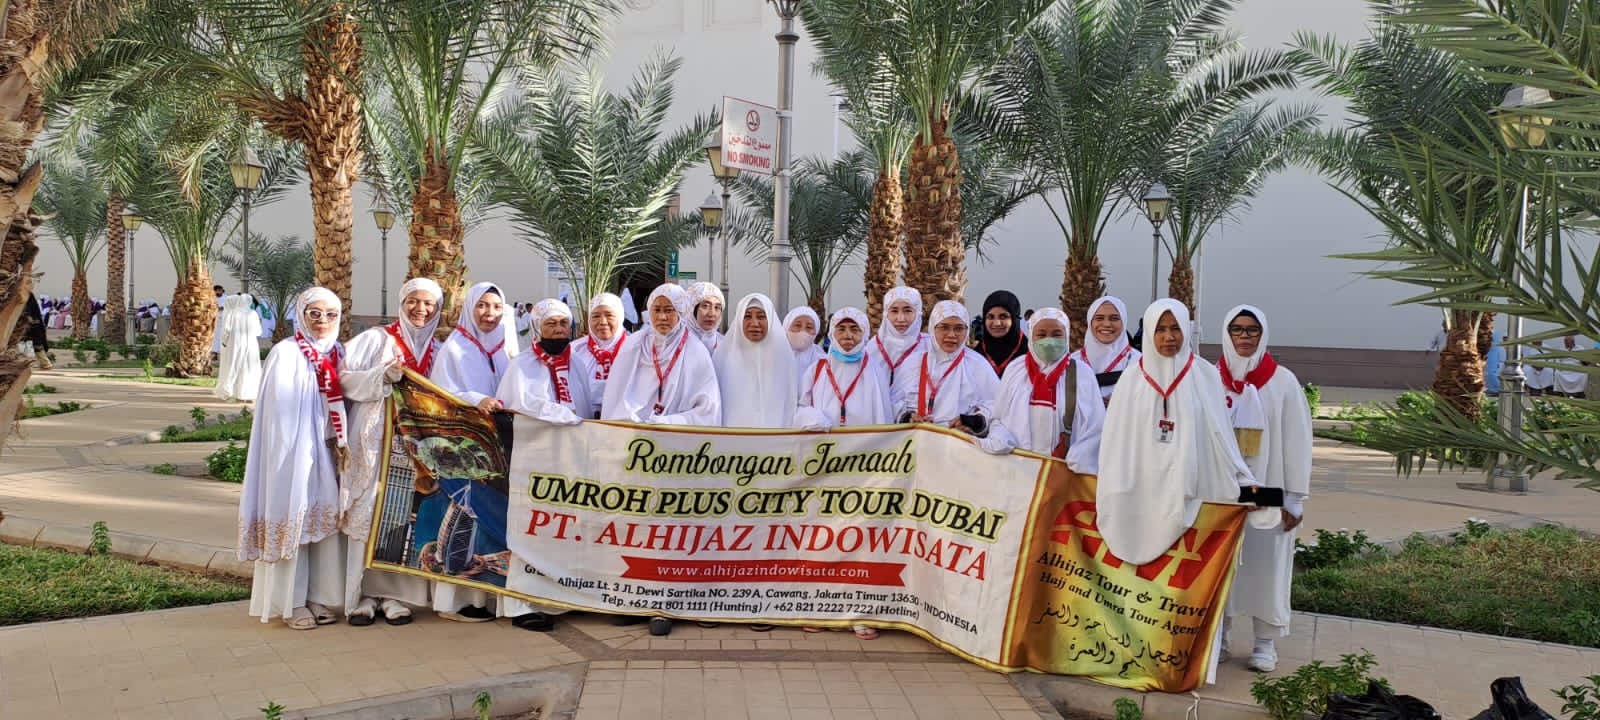 Promo Umroh Plus Terbaru Yogyakarta